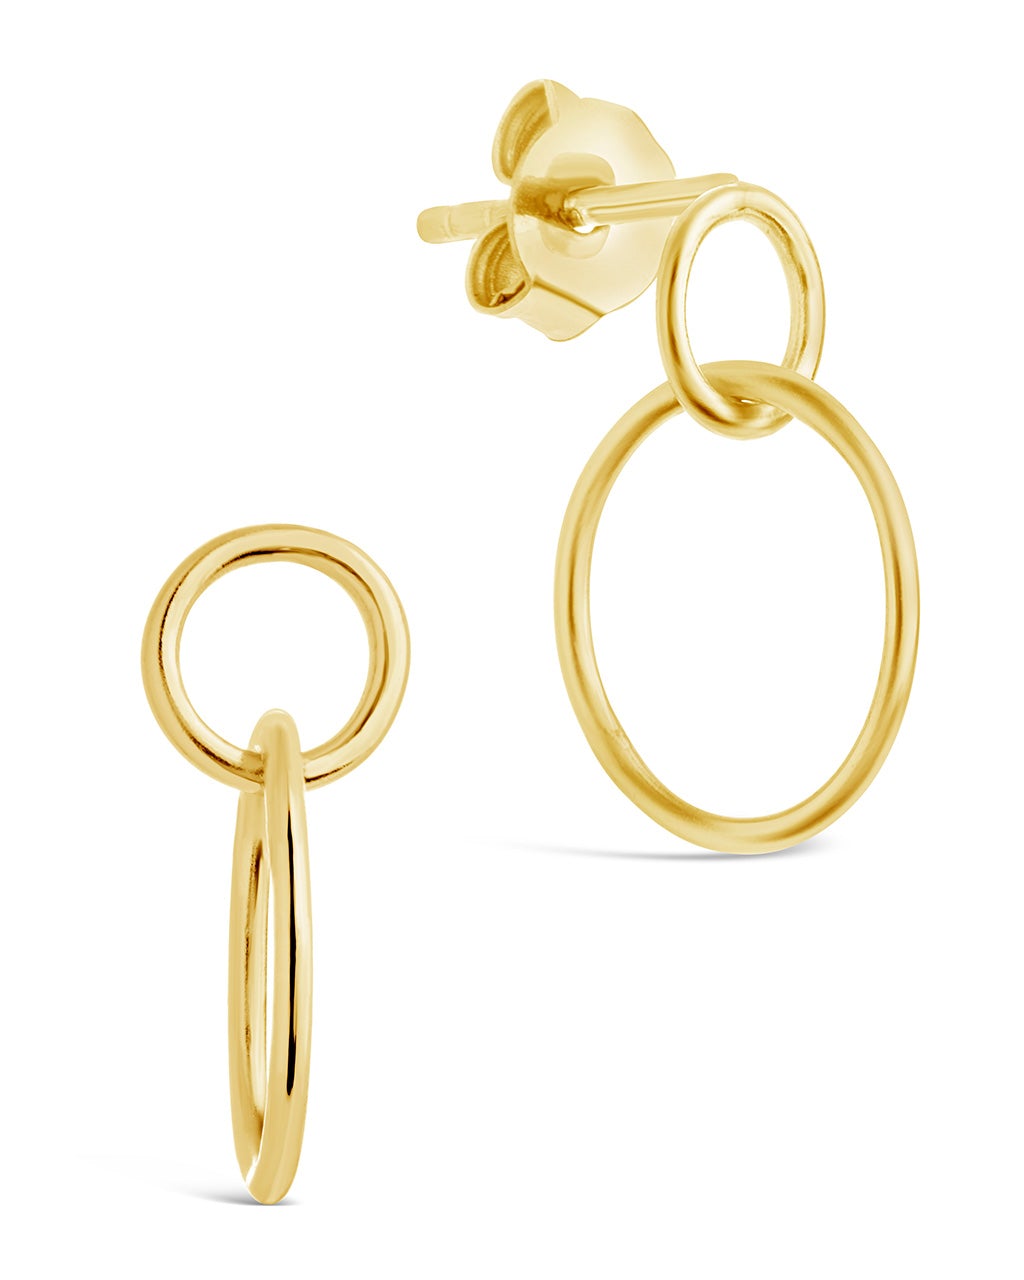 Gold Chain Earring - Minimalist Chain Earring - Sterling Silver Earring -  Silver Chain Earring - Dainty Earring - Tiny Earring - For Daily